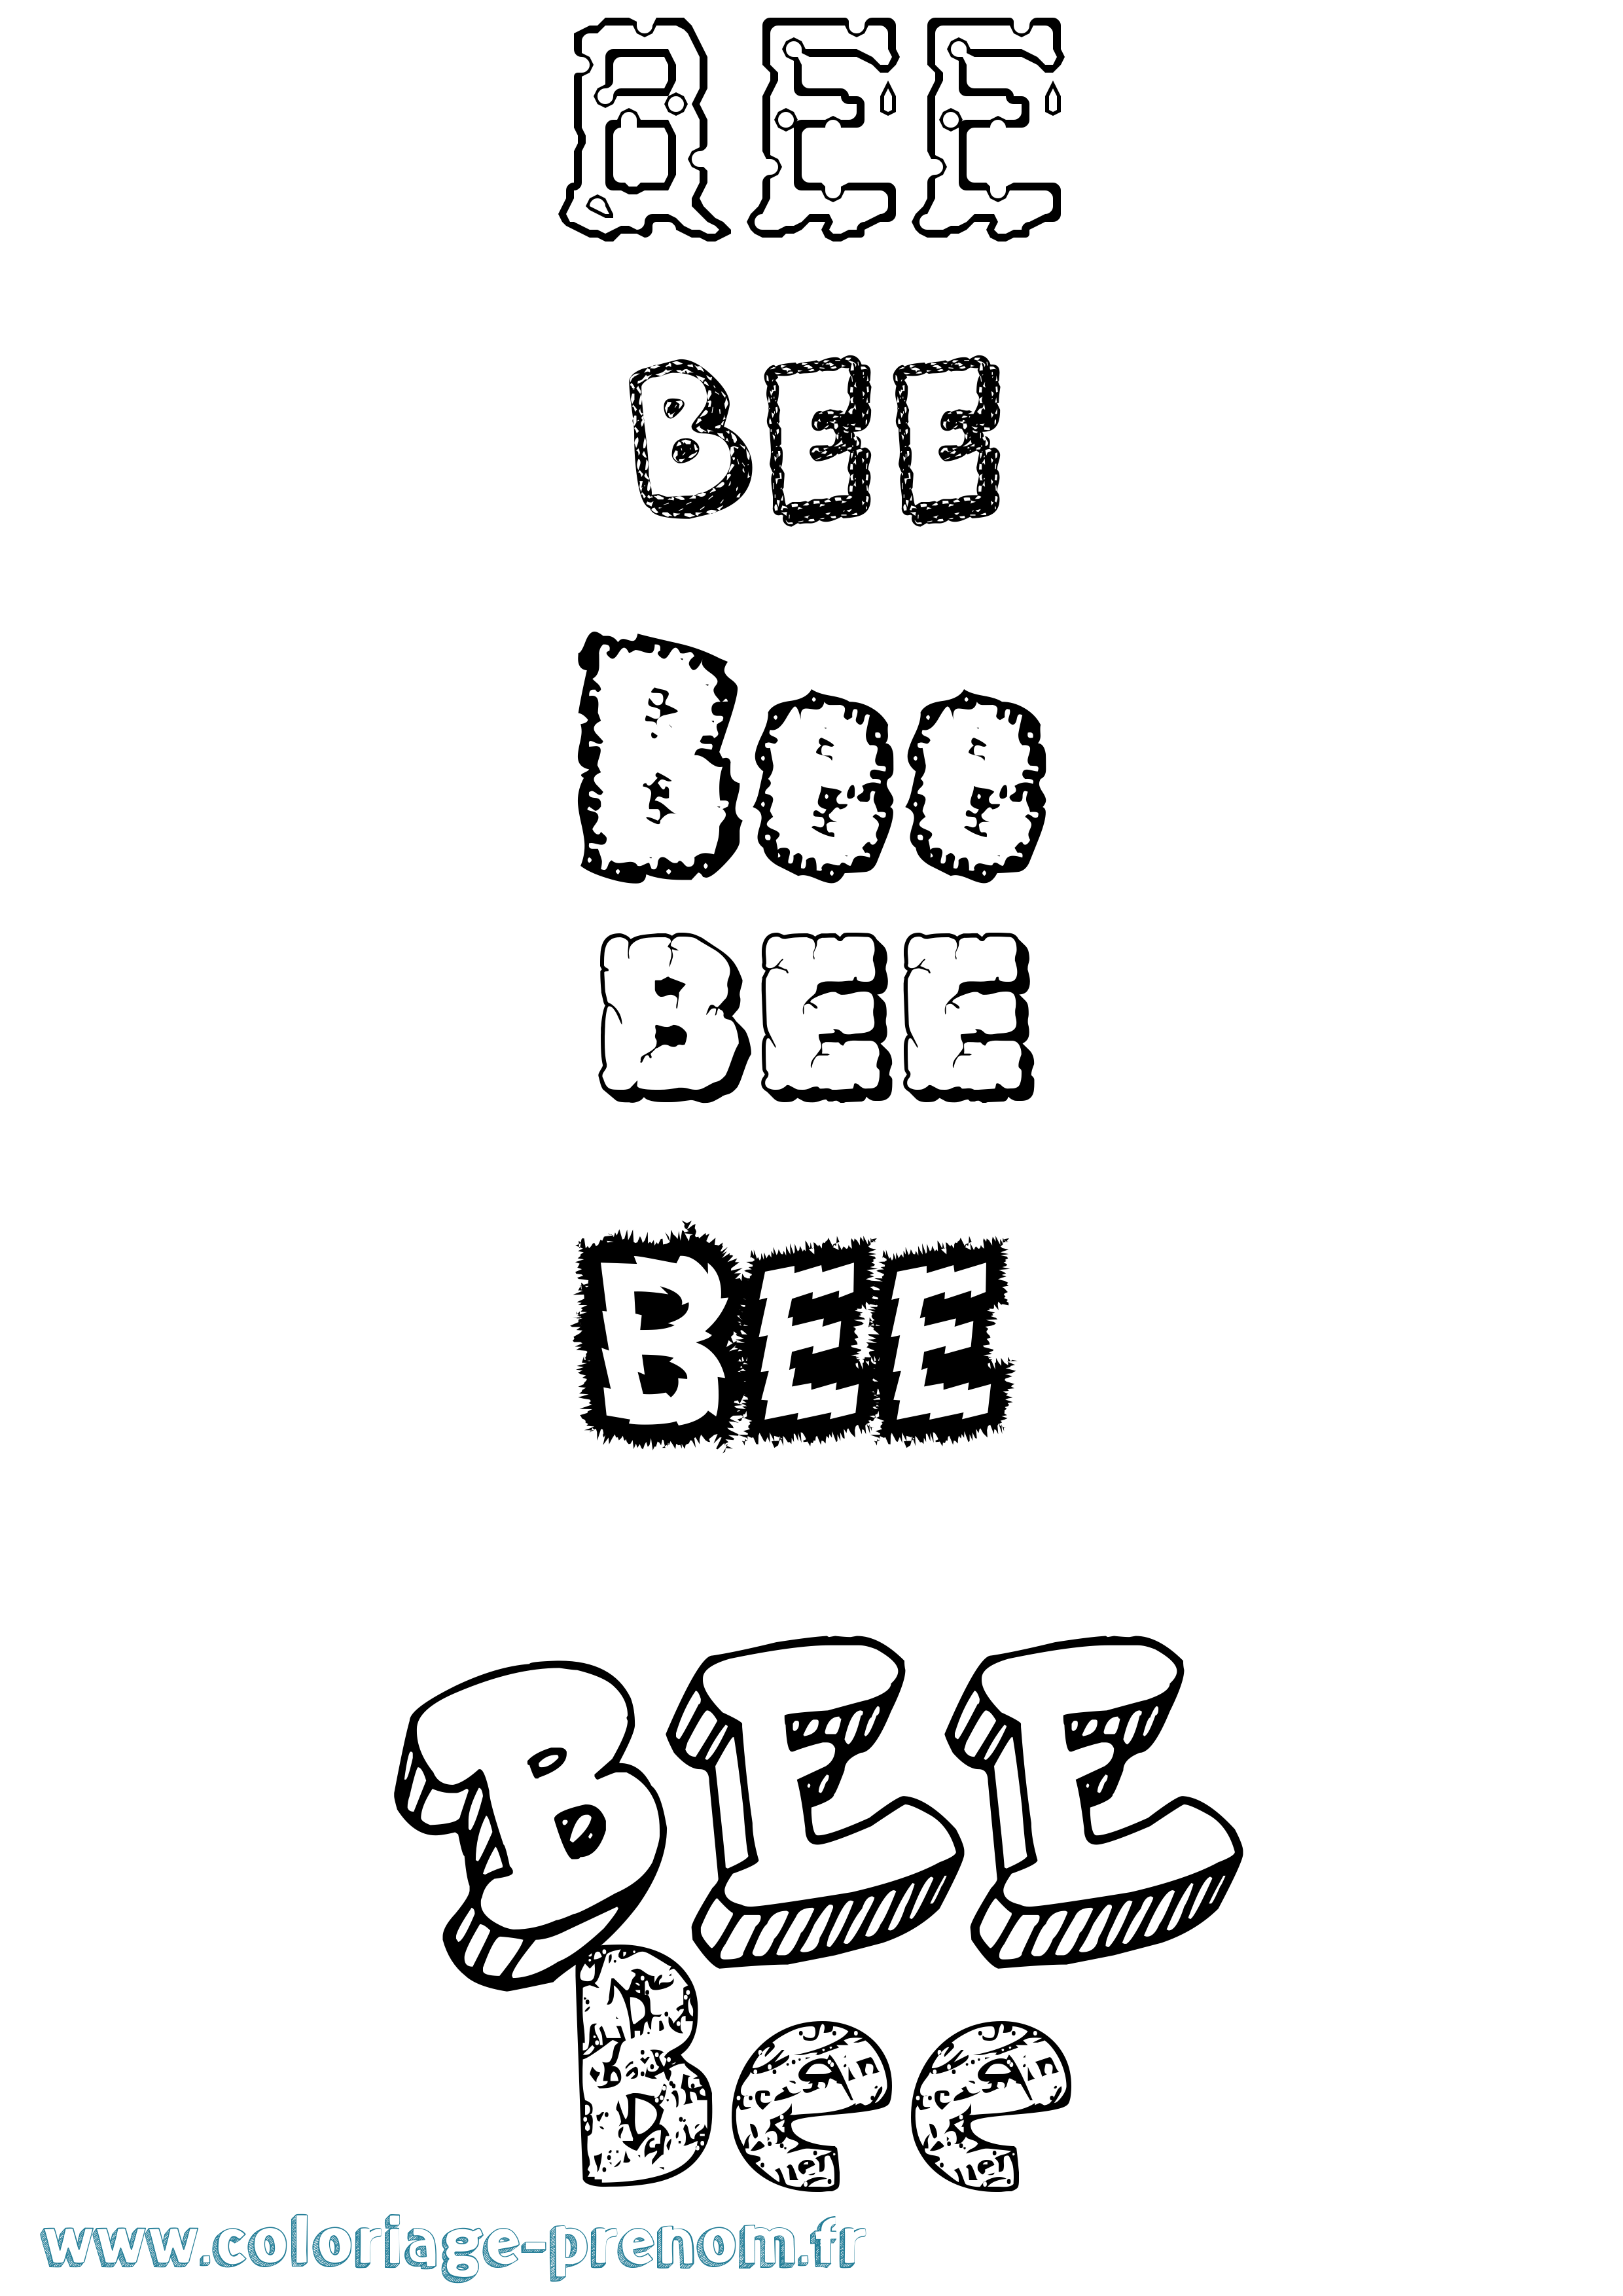 Coloriage prénom Bee Destructuré